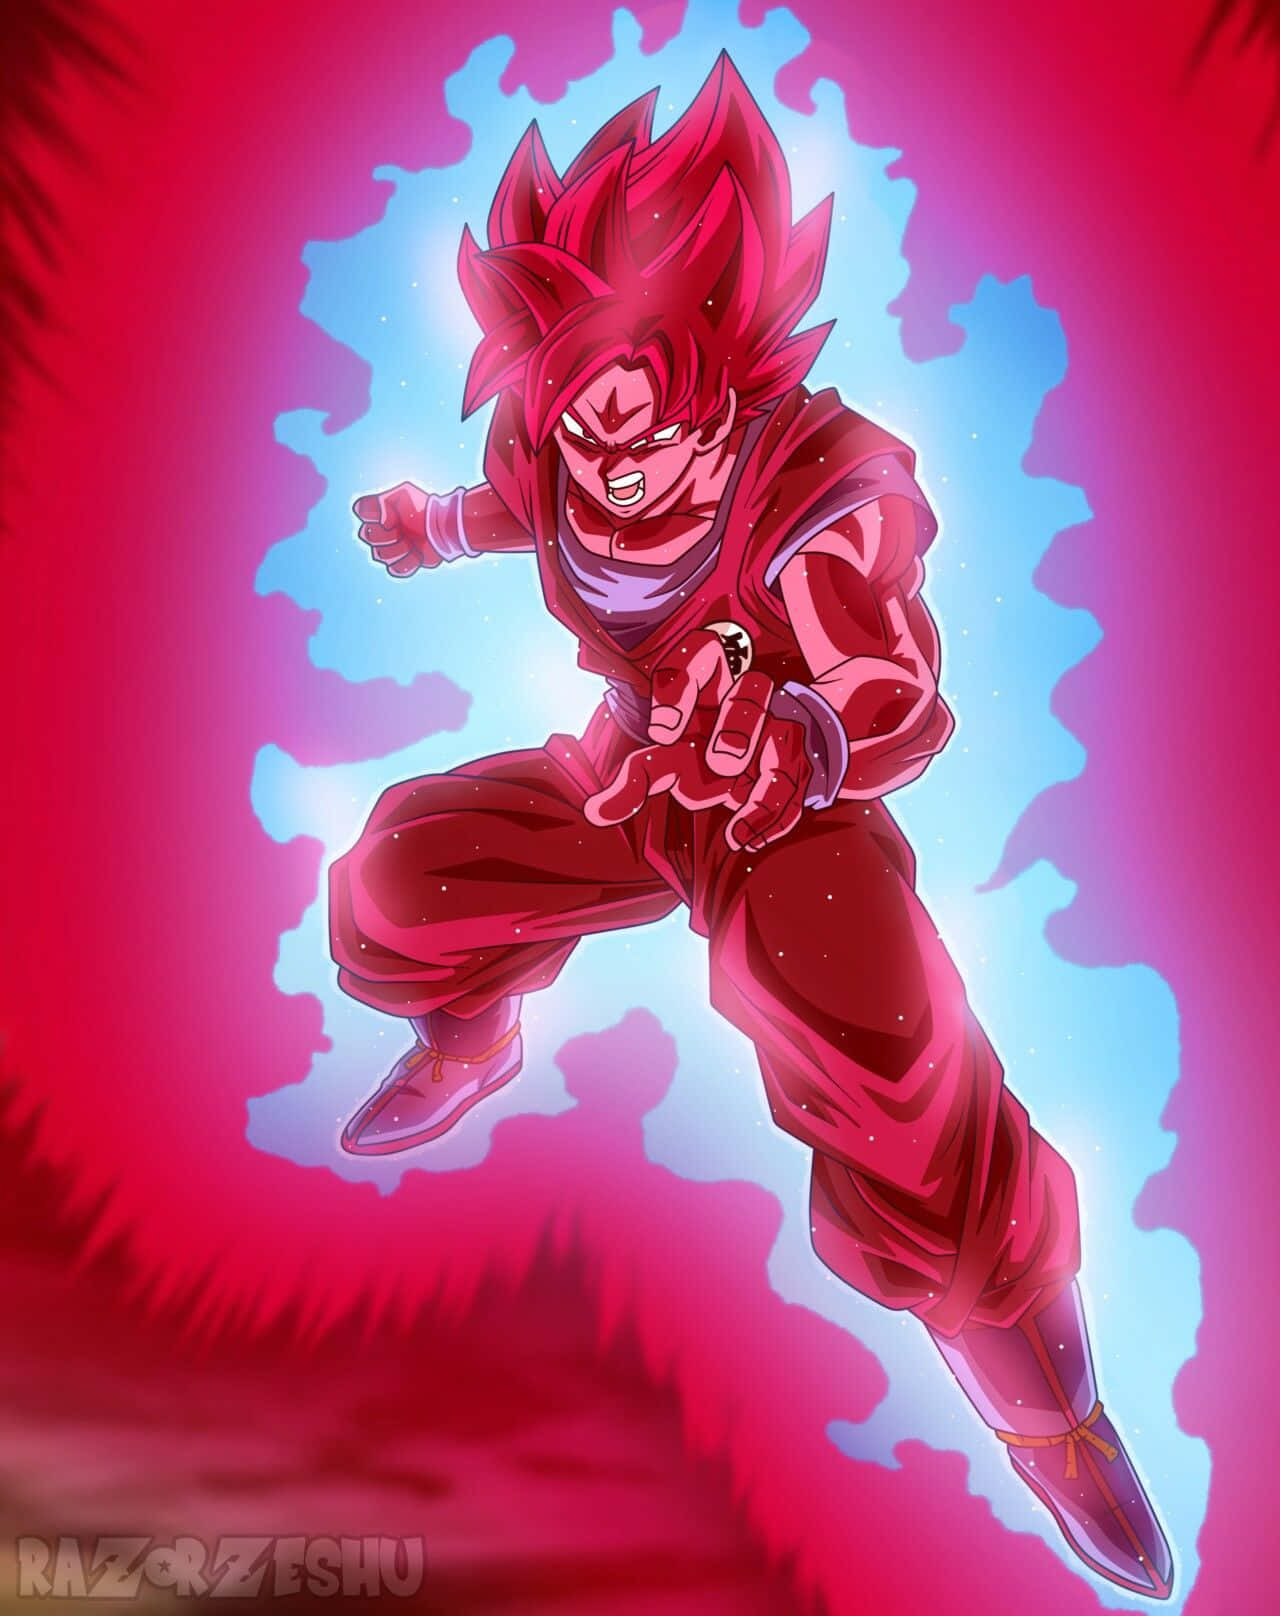 Goku Kaioken in DBZ Wallpaper by patrika